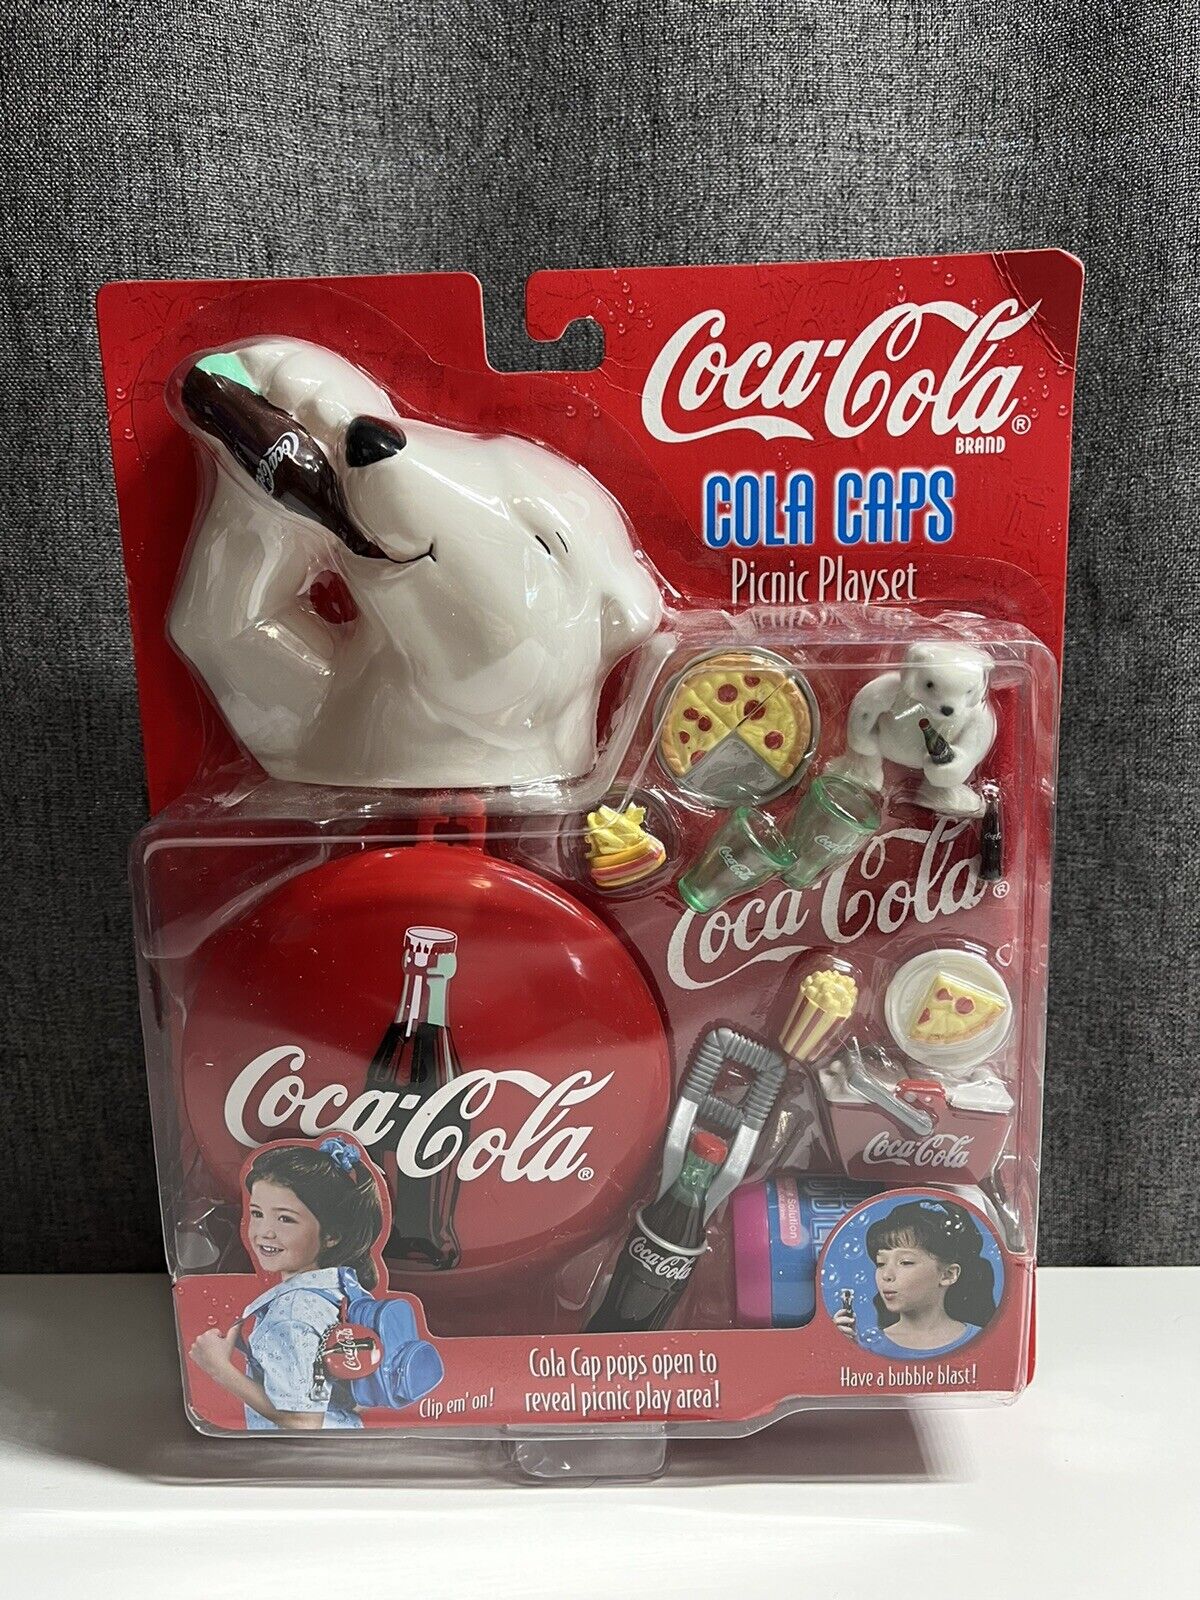 1998 Coca-cola Cola Caps Picnic Playset Item 10392 Brand New Never Opened!